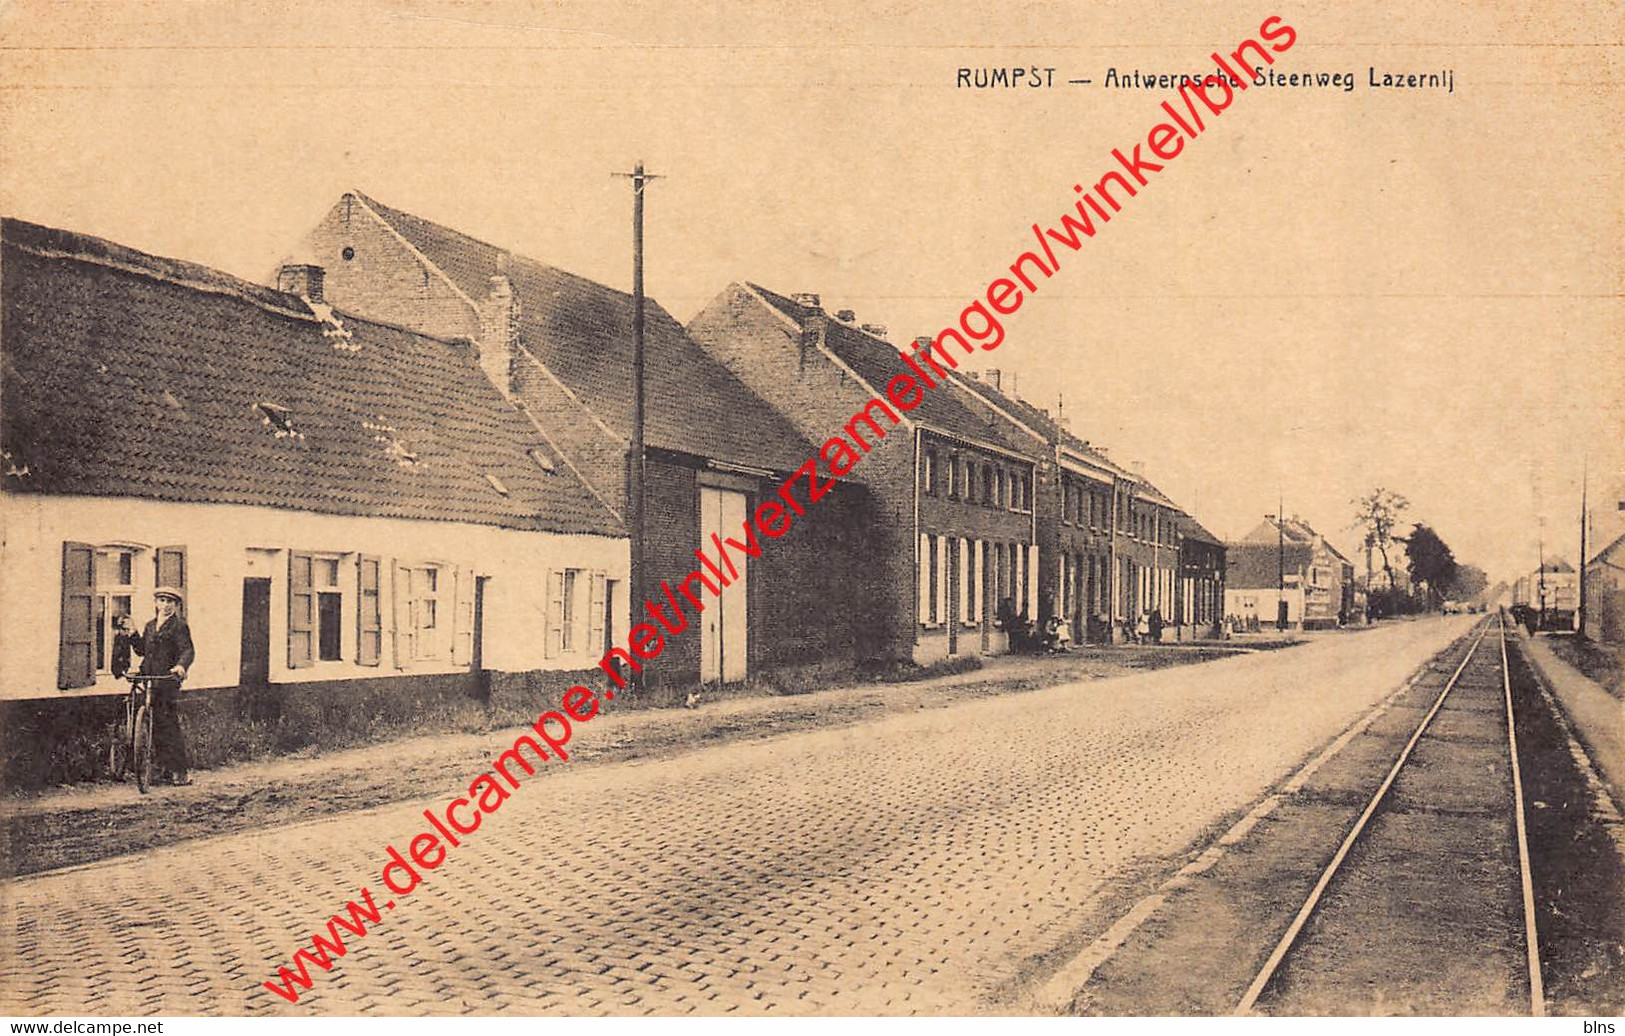 Rumpst - Antwerpsche Steenweg Lazernij - Rumst - Rumst